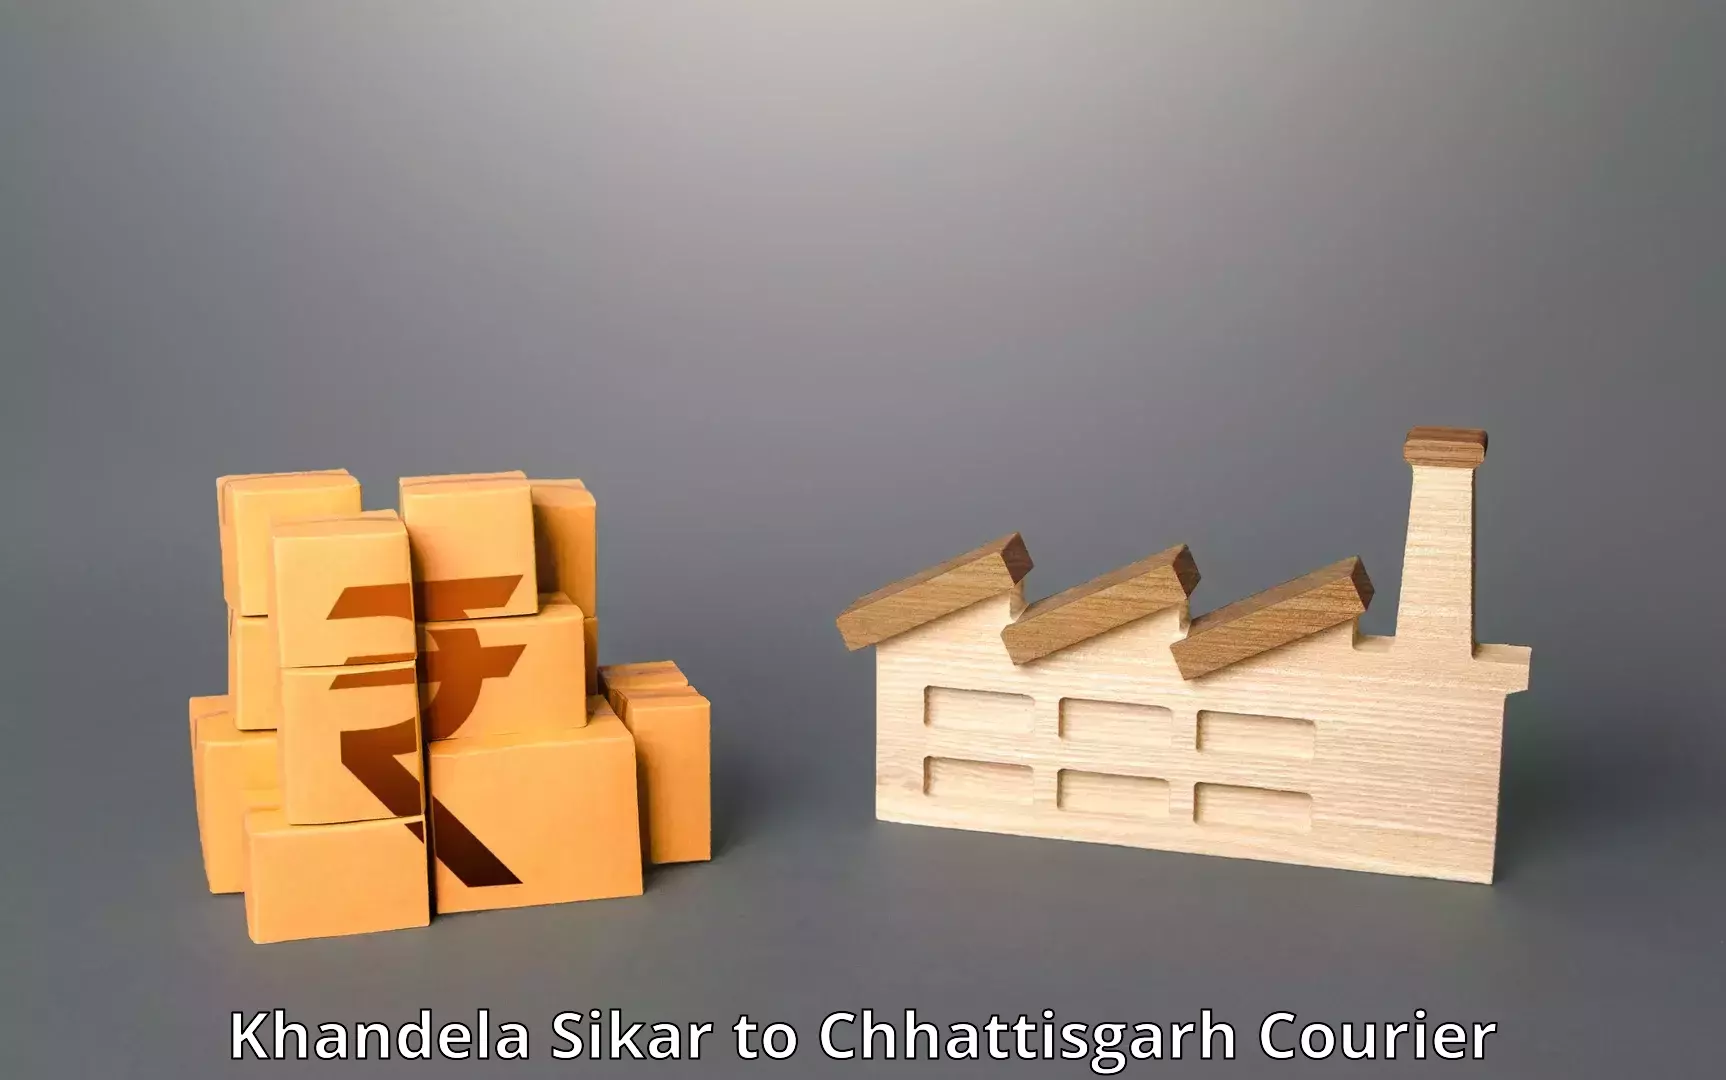 Professional parcel services Khandela Sikar to Korea Chhattisgarh